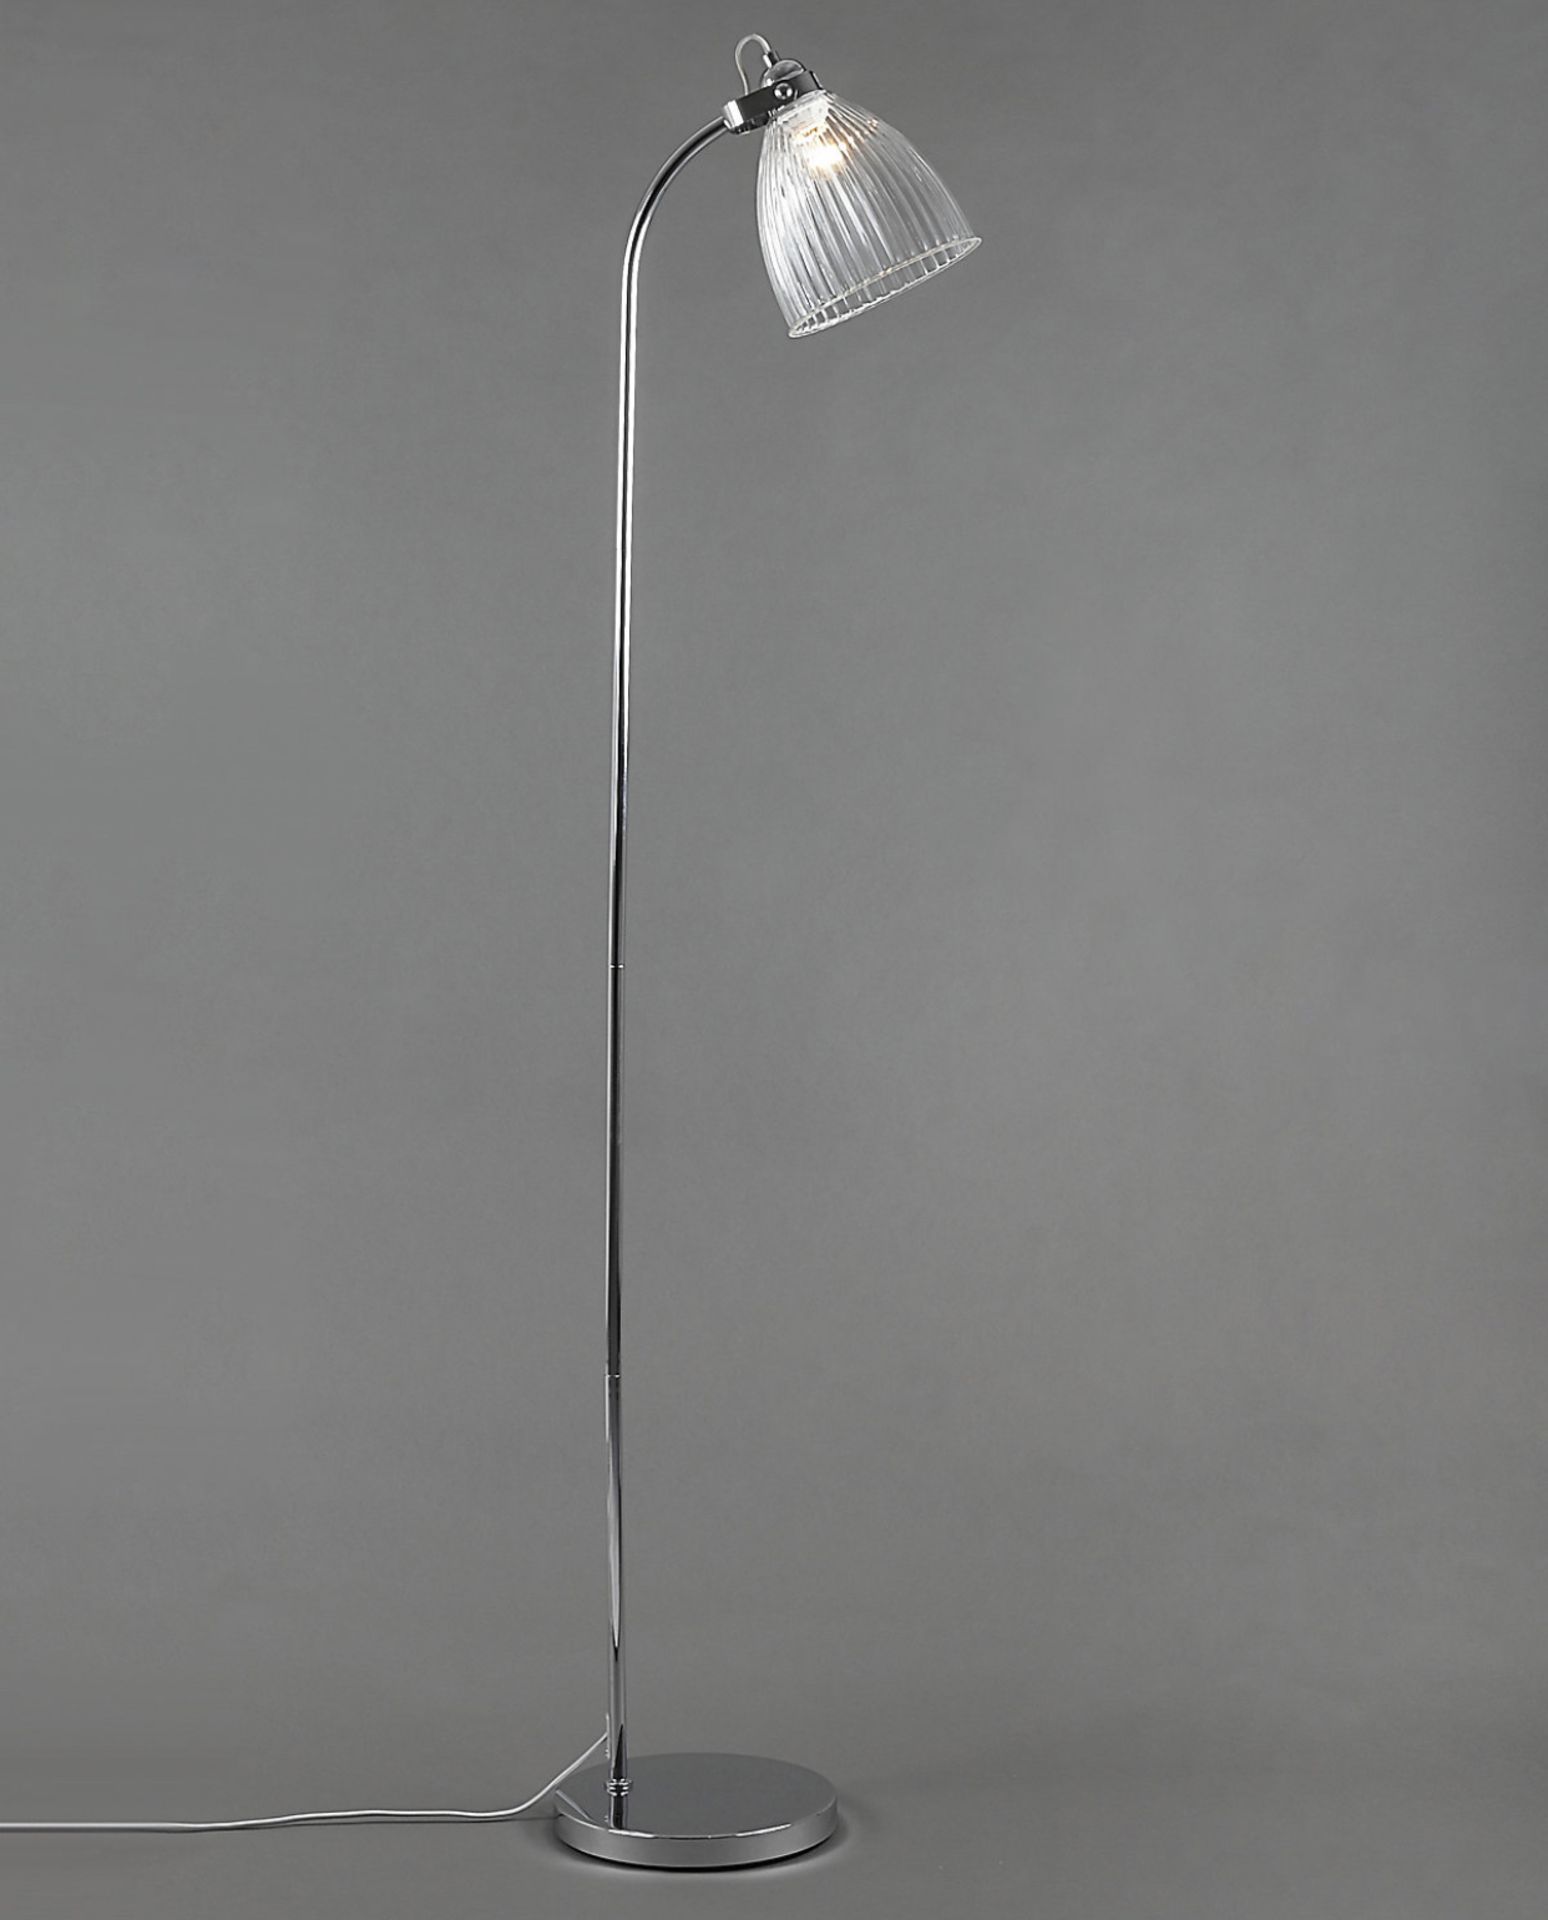 Stylish Florence Floor Lamp RRP £89